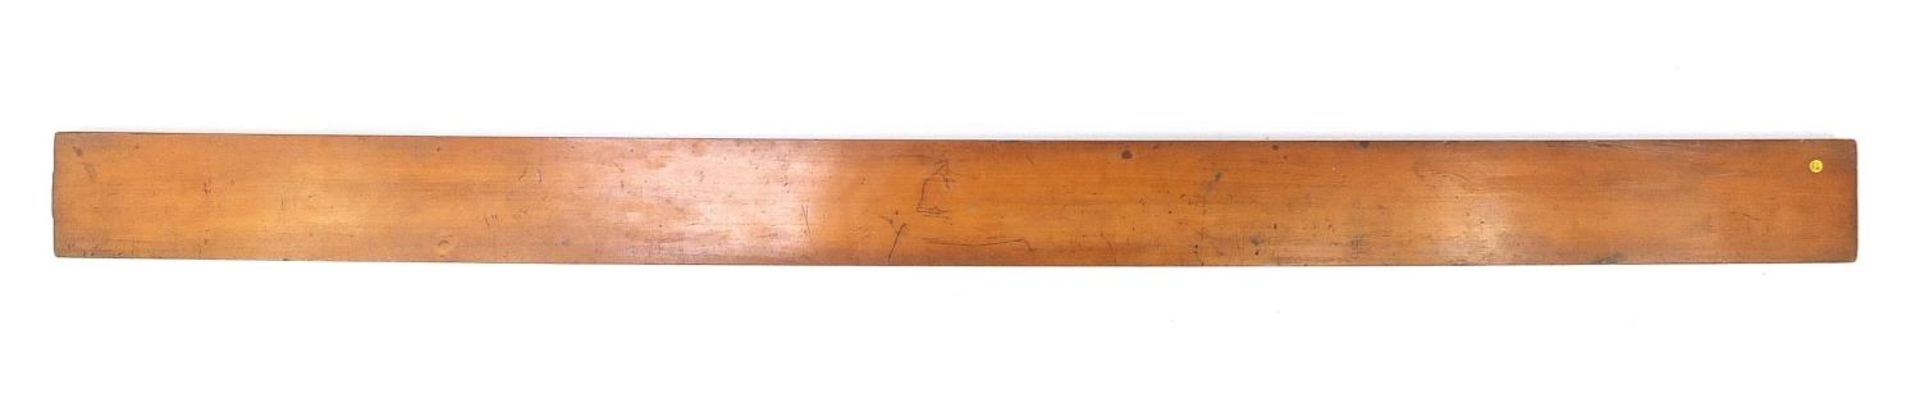 Antique Stanley boxwood three foot sliding rule impressed Stanley Great Turnstile Holborn London, - Image 13 of 14